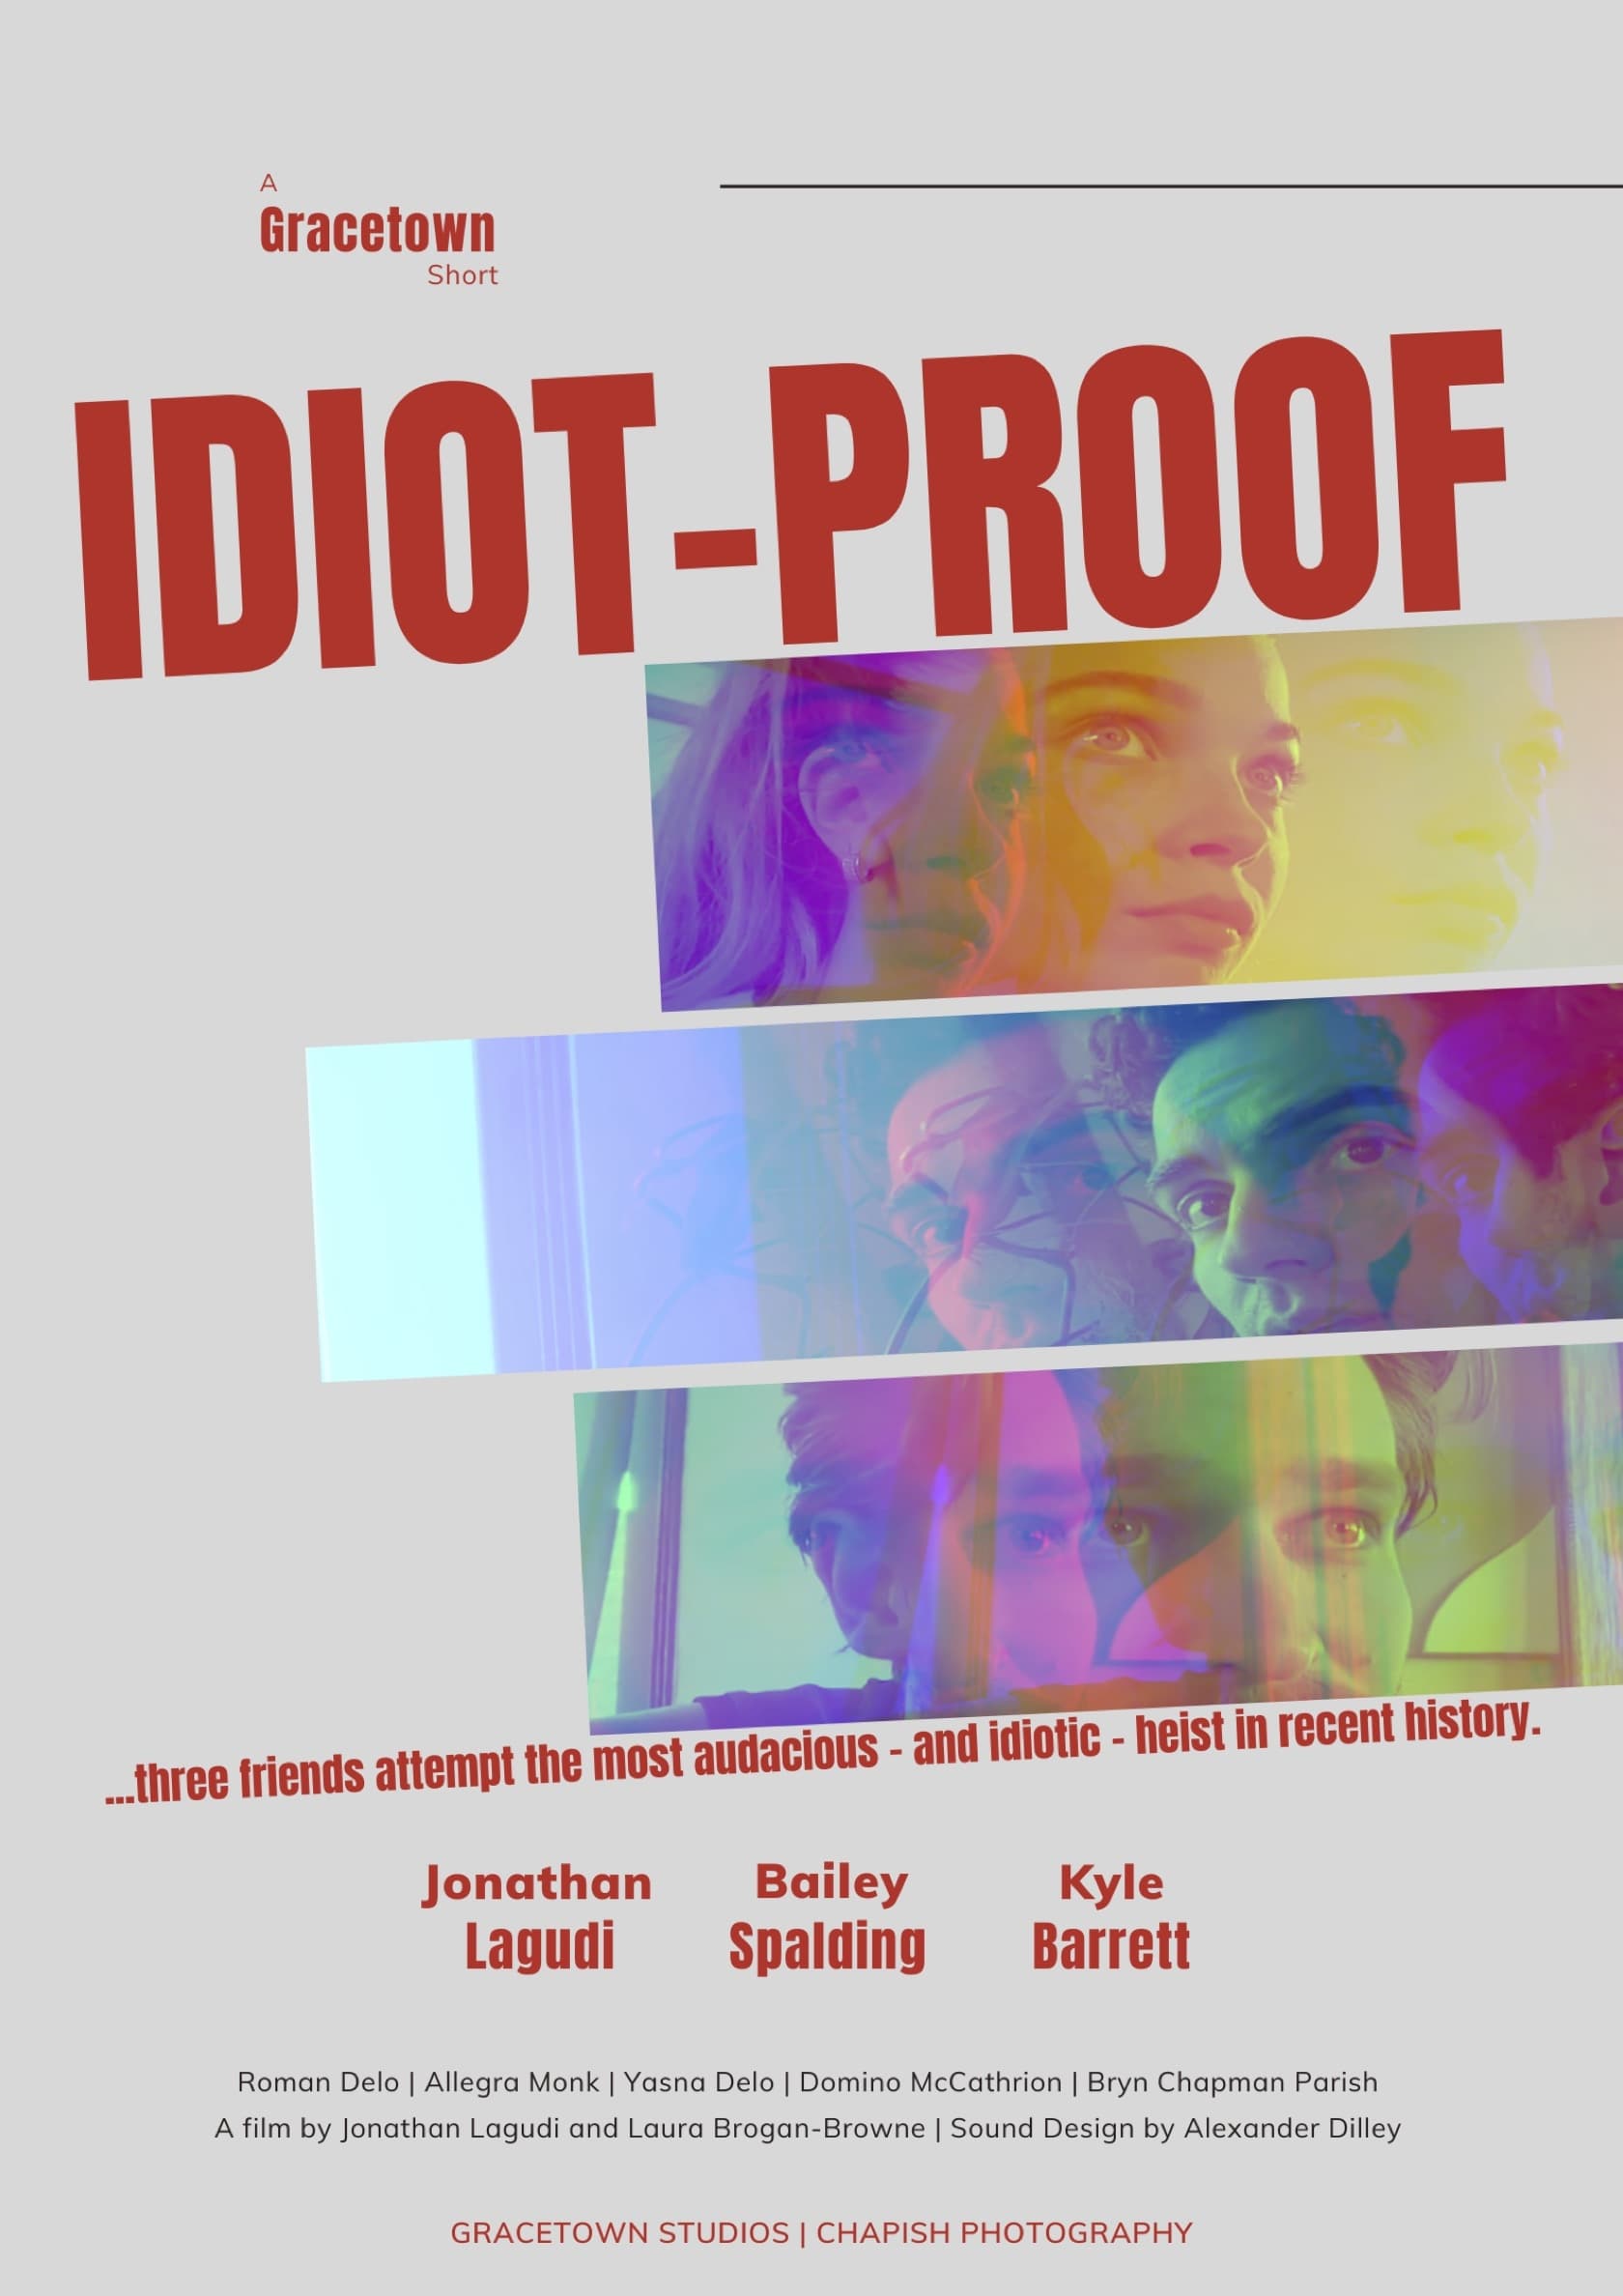 Idiot-Proof